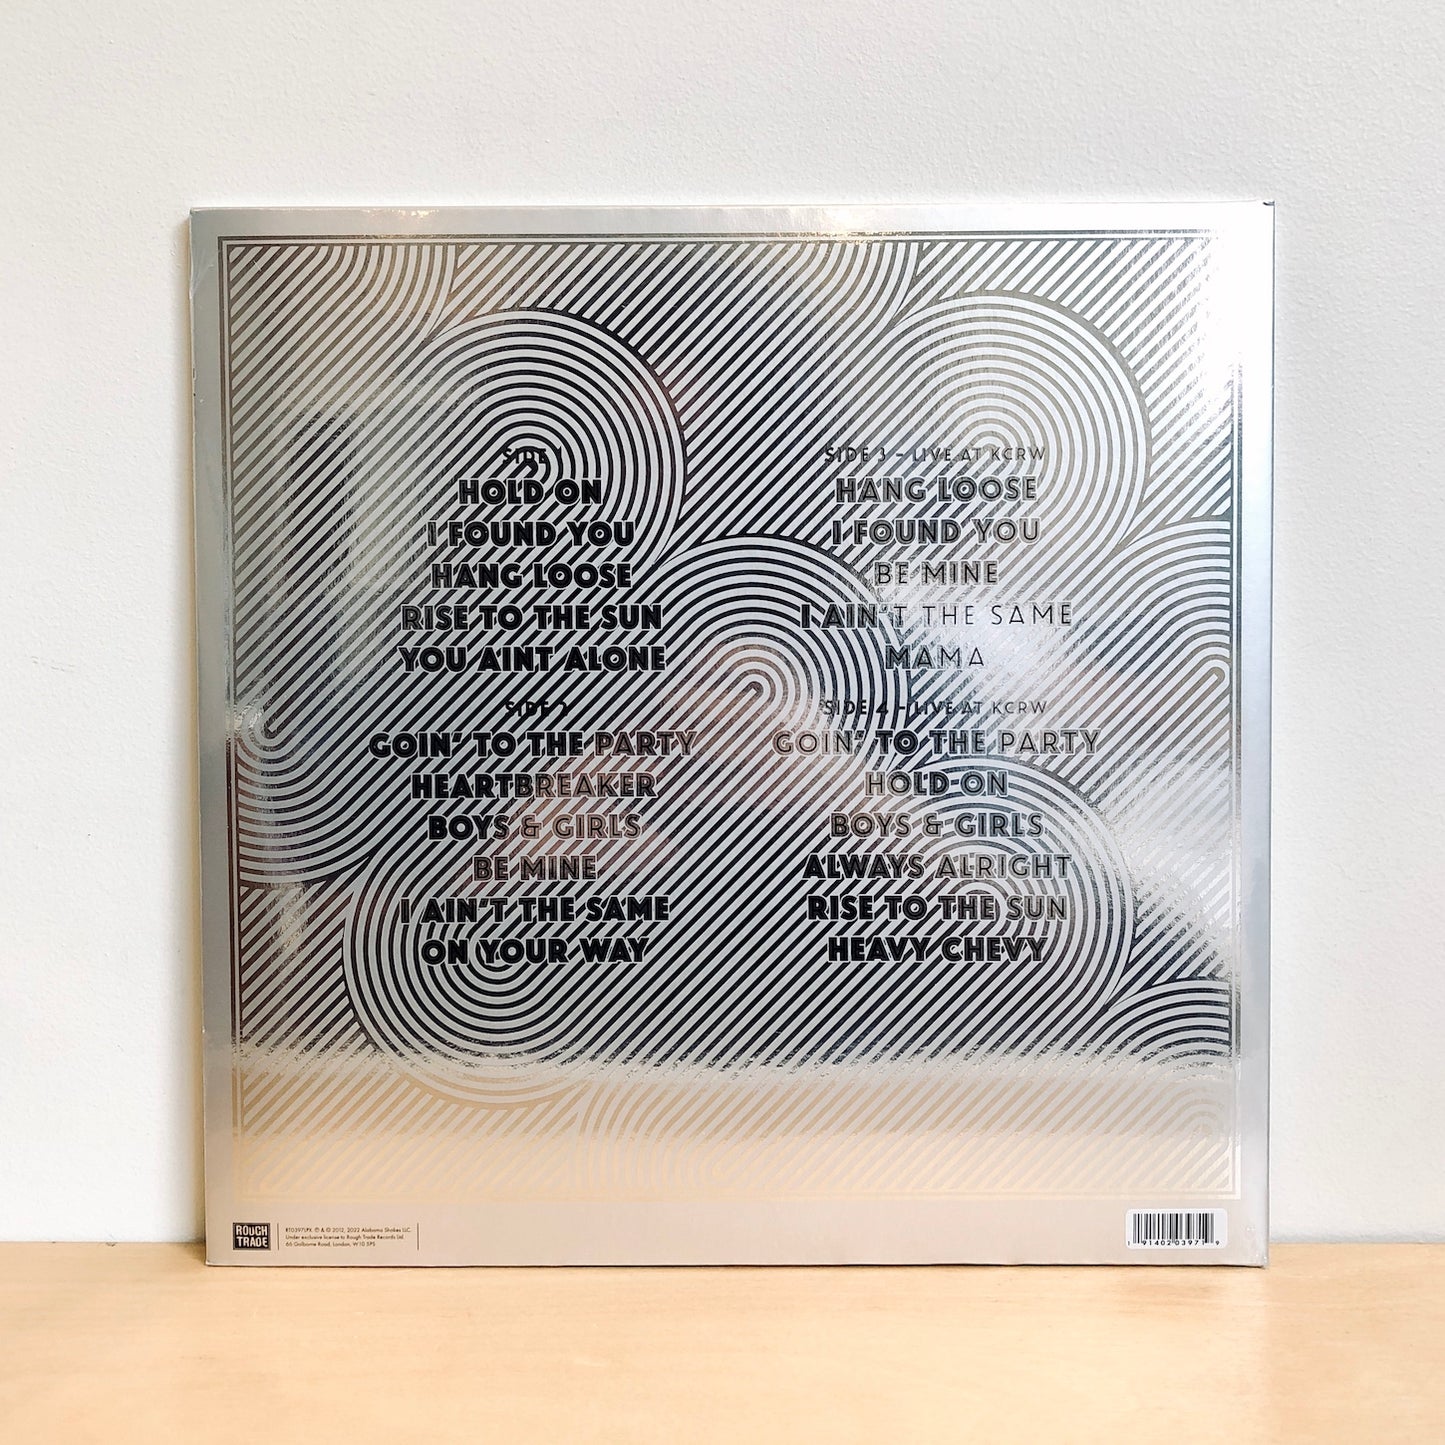 Alabama Shakes - Boys & Girls. 2LP [10 Year Anniversary Edition, Limited Edition Crystal Clear Vinyl]